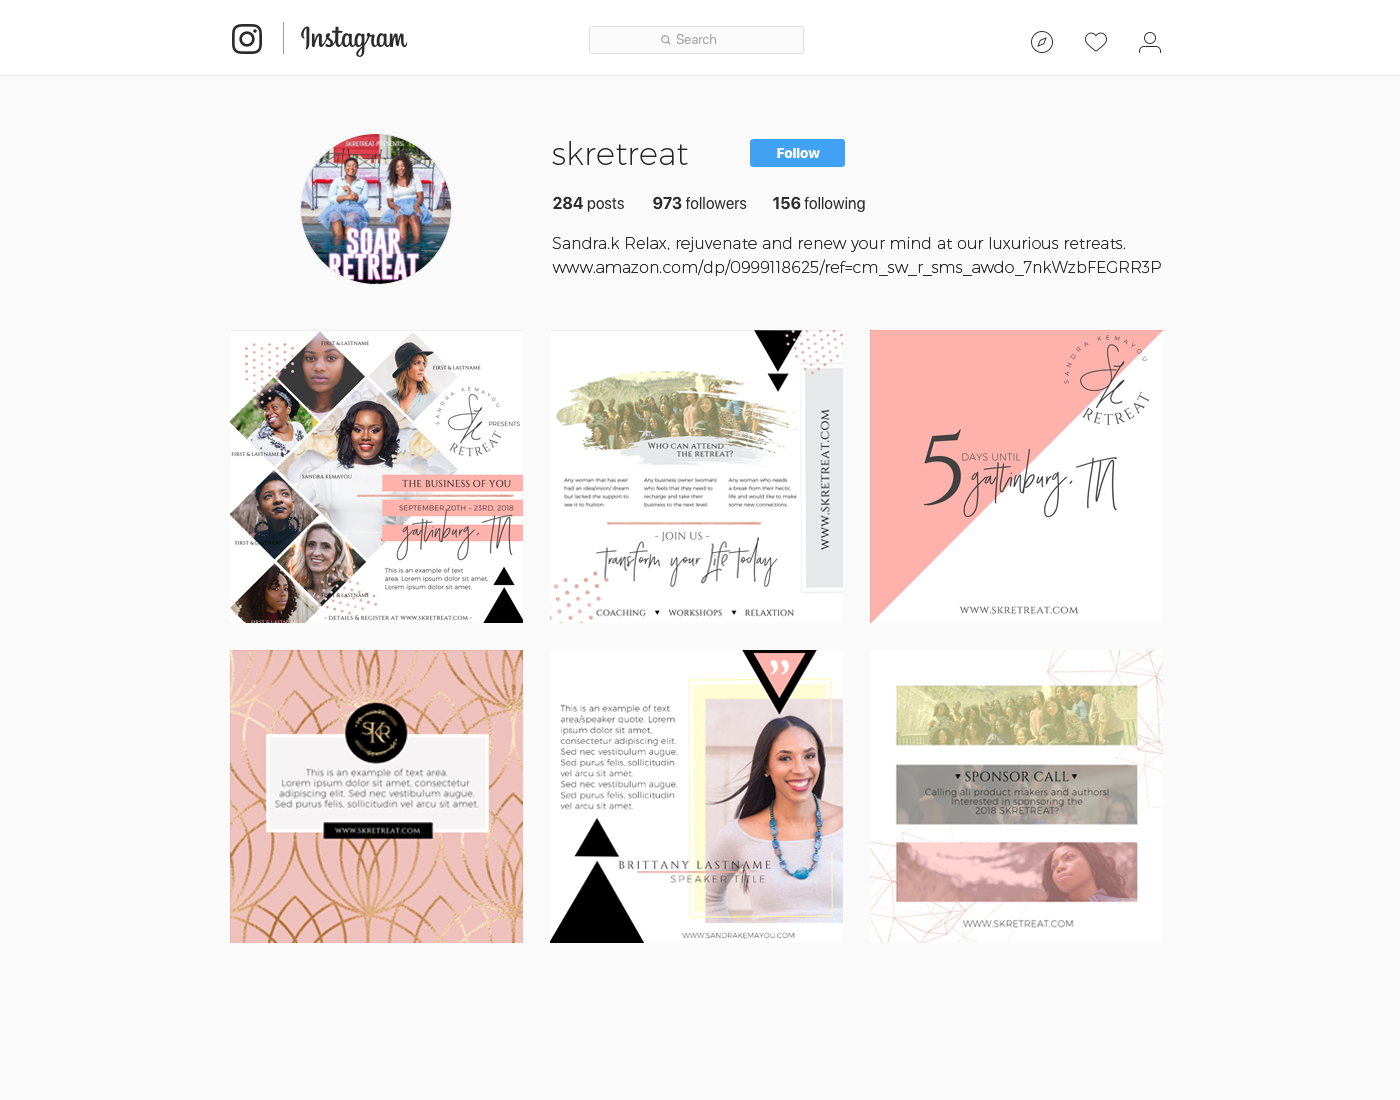 skreated_instagram-profile.png